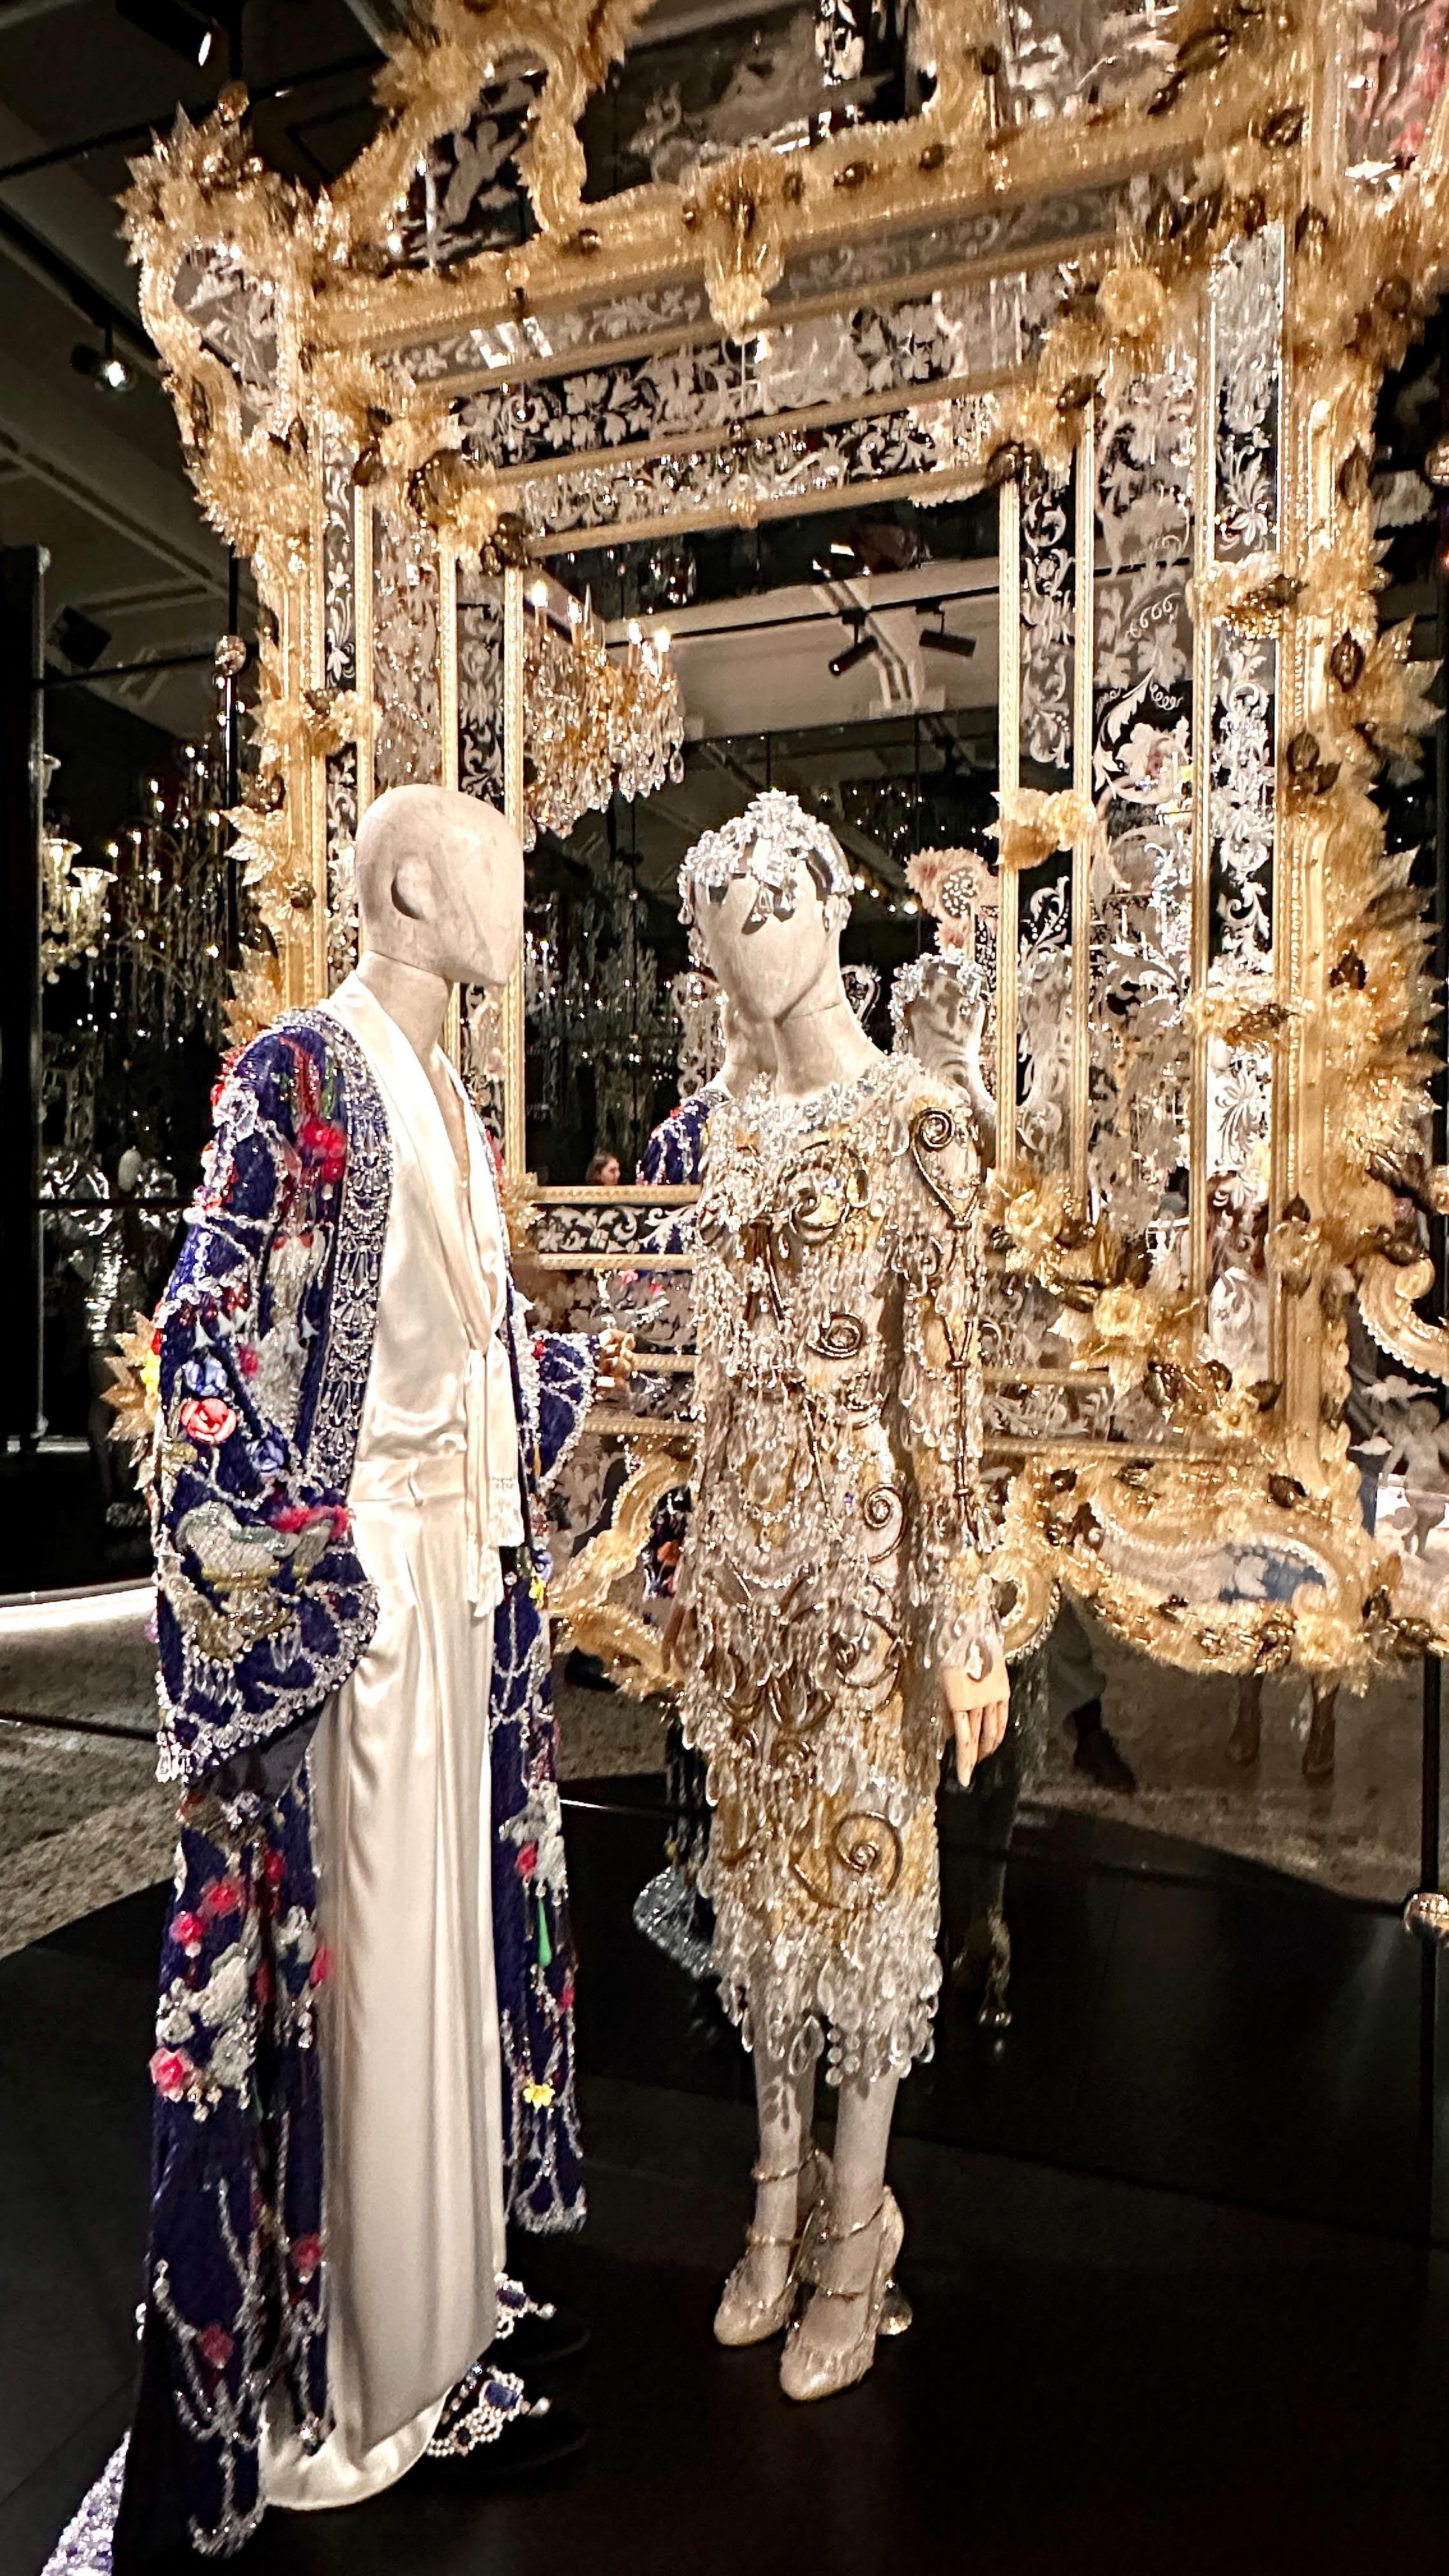 Până pe 31 iulie puteți vizita această expoziție la Palazzo Reale din Milano ♥️♥️♥️
#dolcegabbana #dg #exhibition #palazzoreale #milandesignweek #milan #museum #fashion #art #artisans #craftsmanship #masterpiece